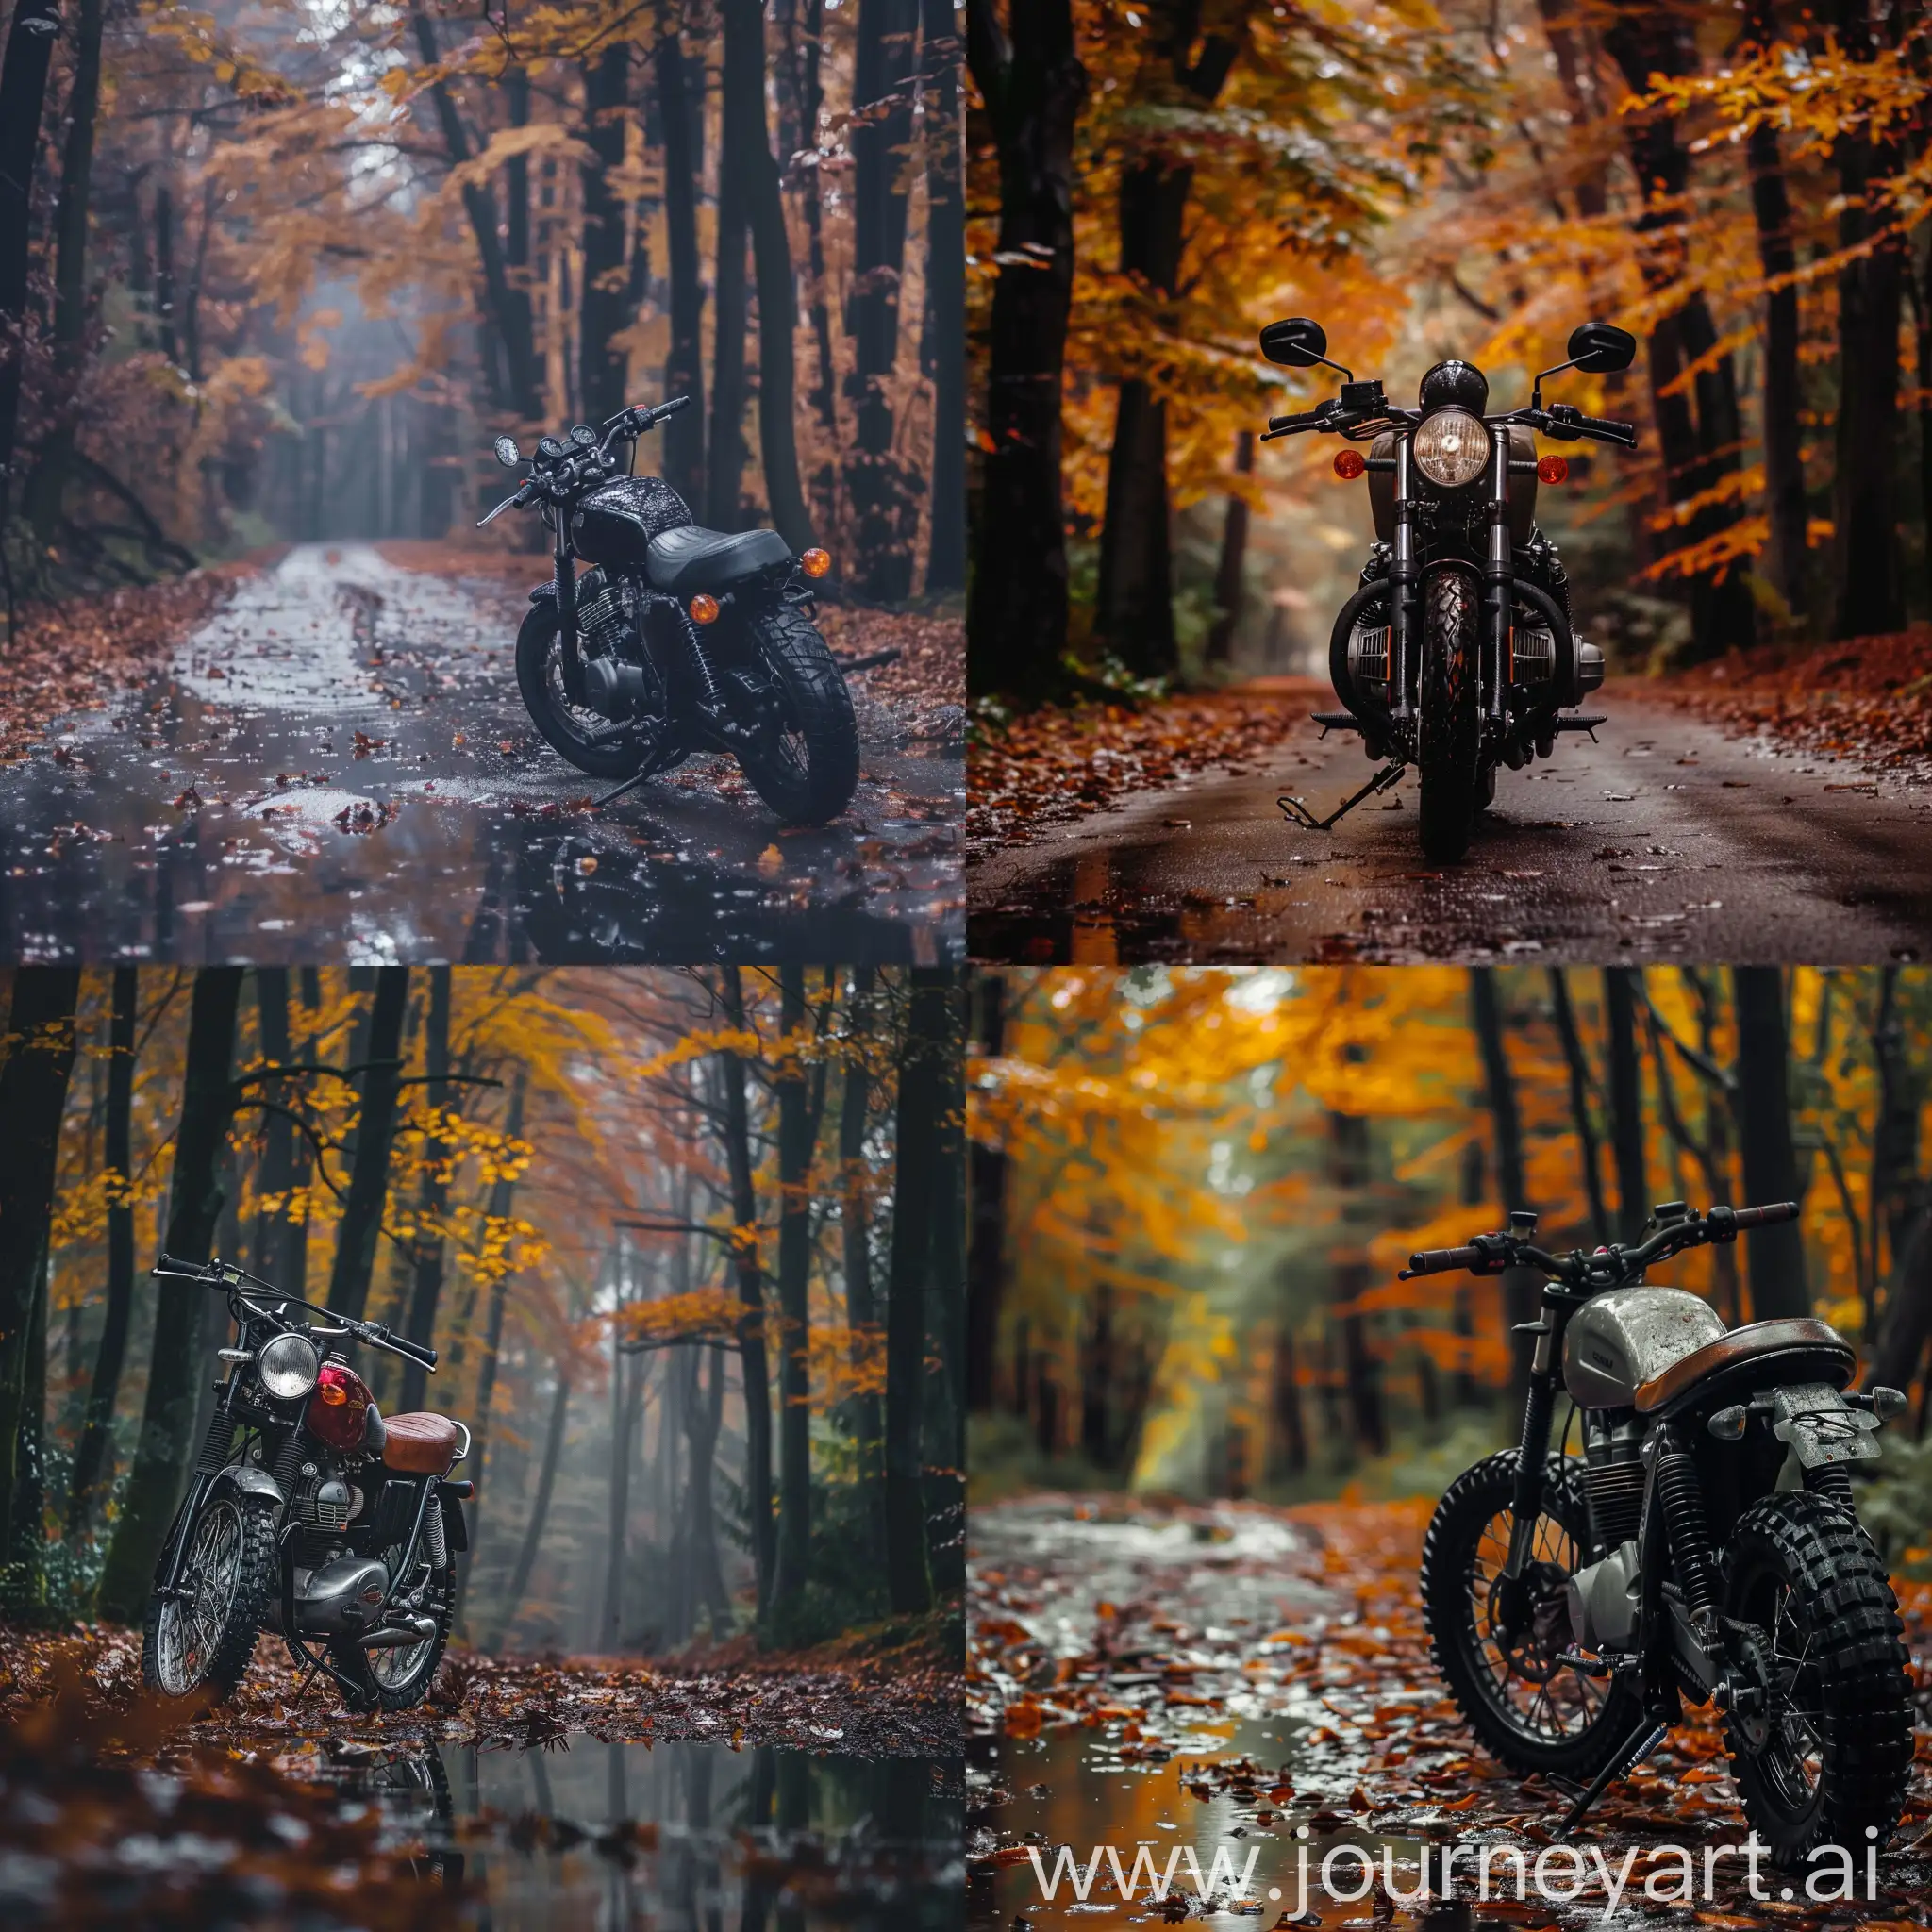 Autumn-Rain-Ride-Through-the-Forest